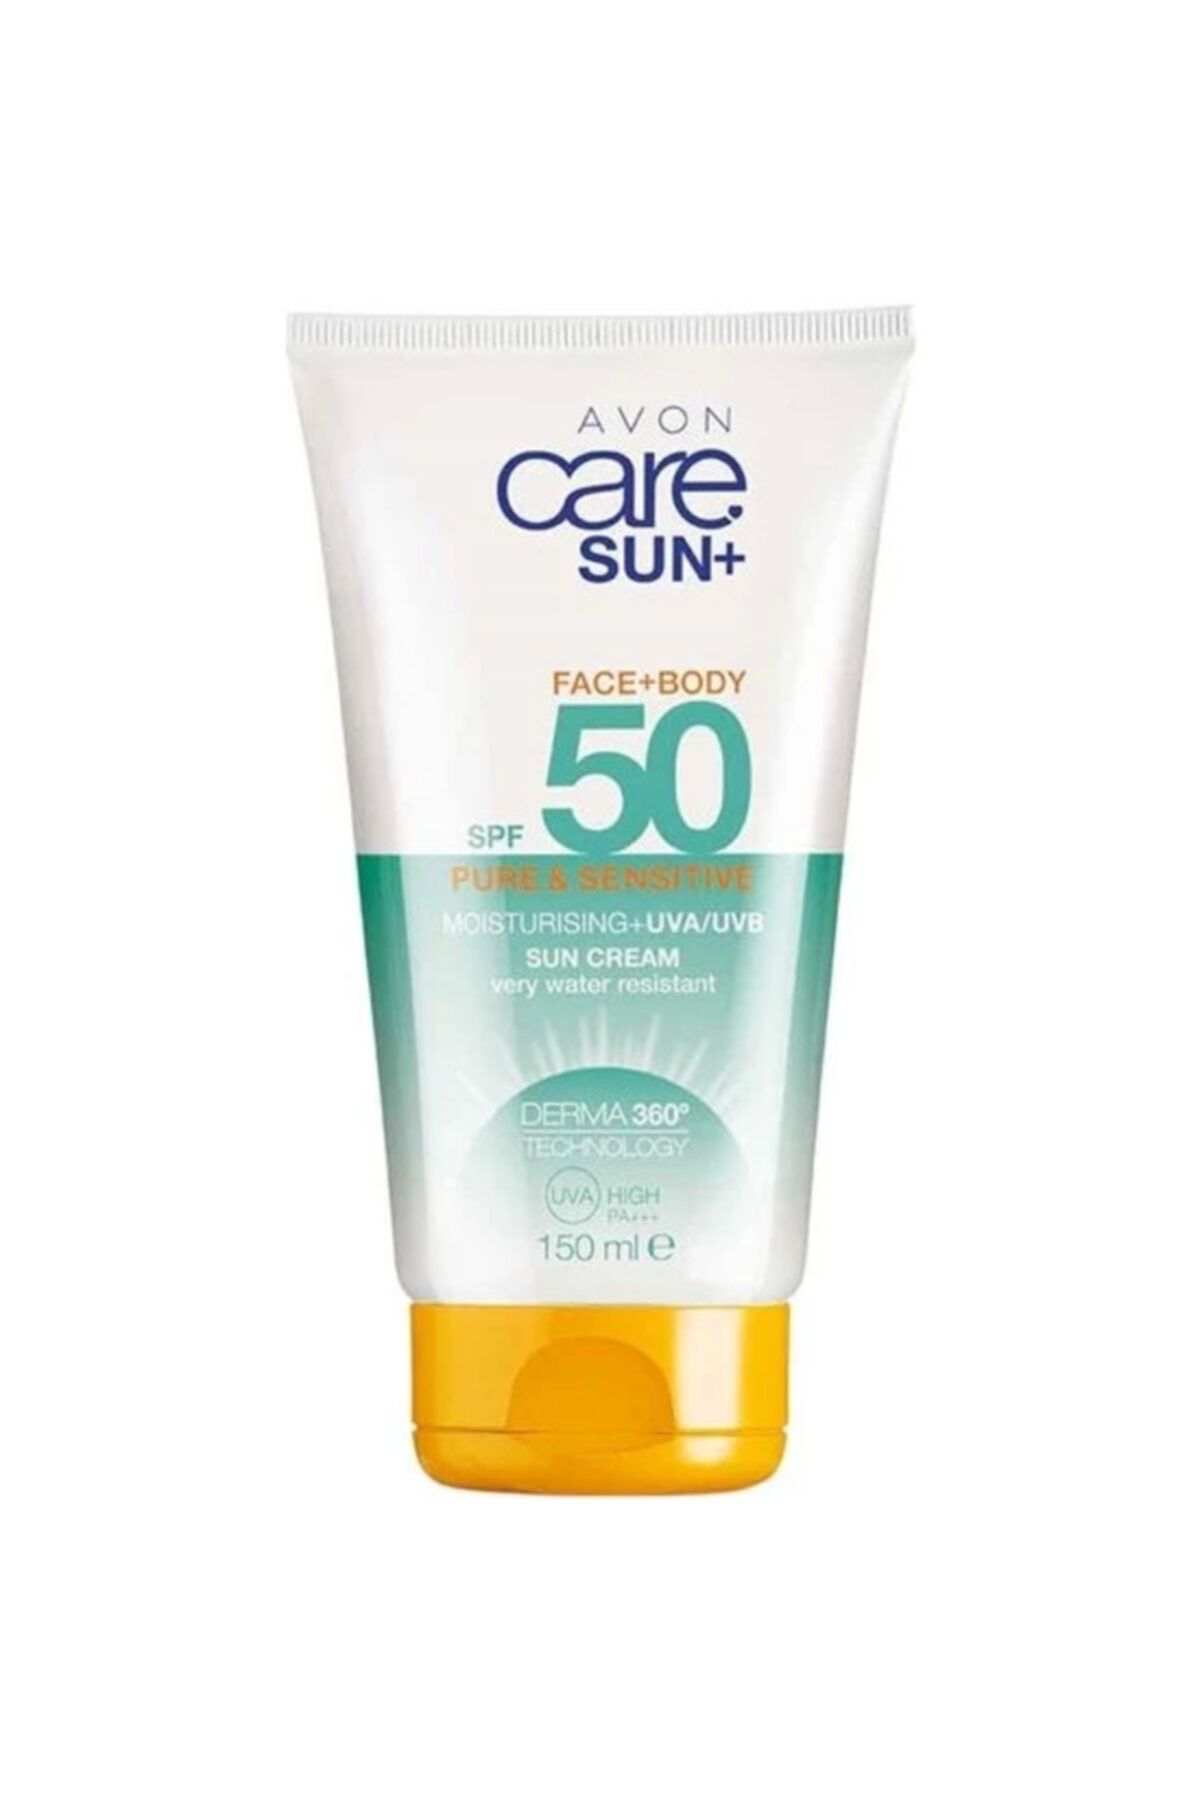 Avon Care Sun+ Pure & Sensitive Face+body Güneş Kremi